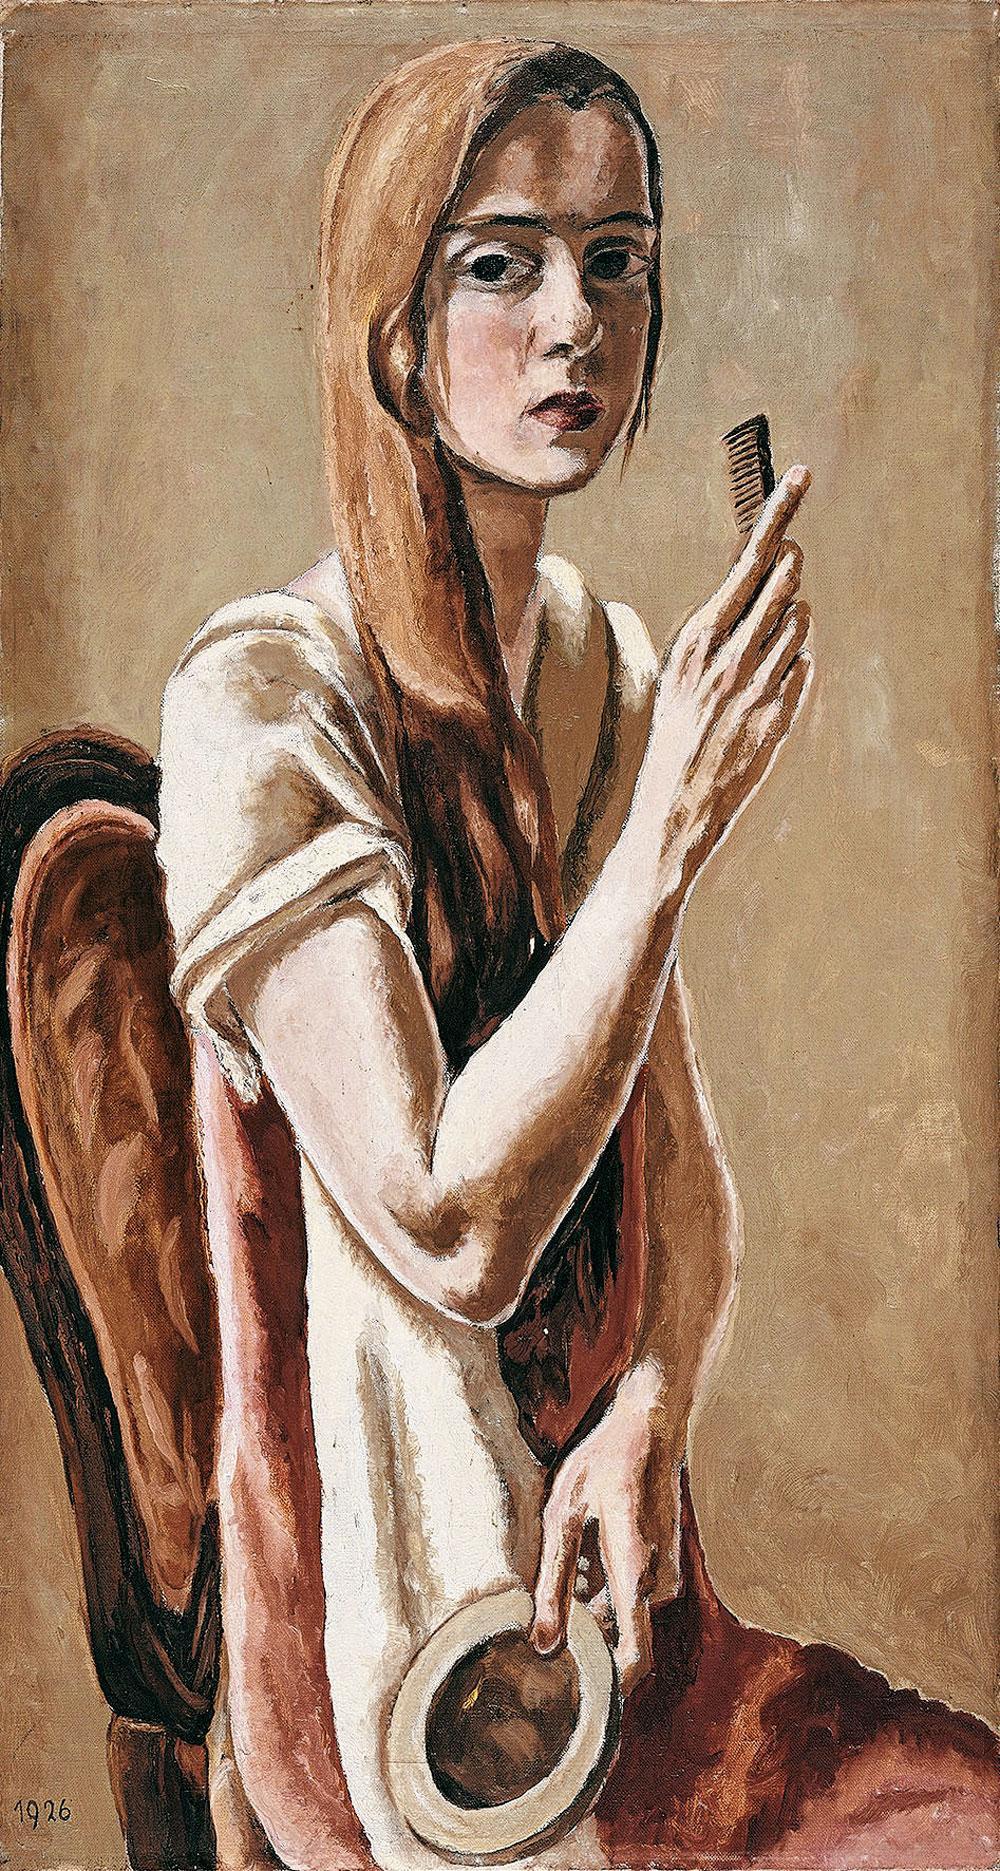 Marie-Louise von Motesiczky, Autoportrait au peigne, 1926.